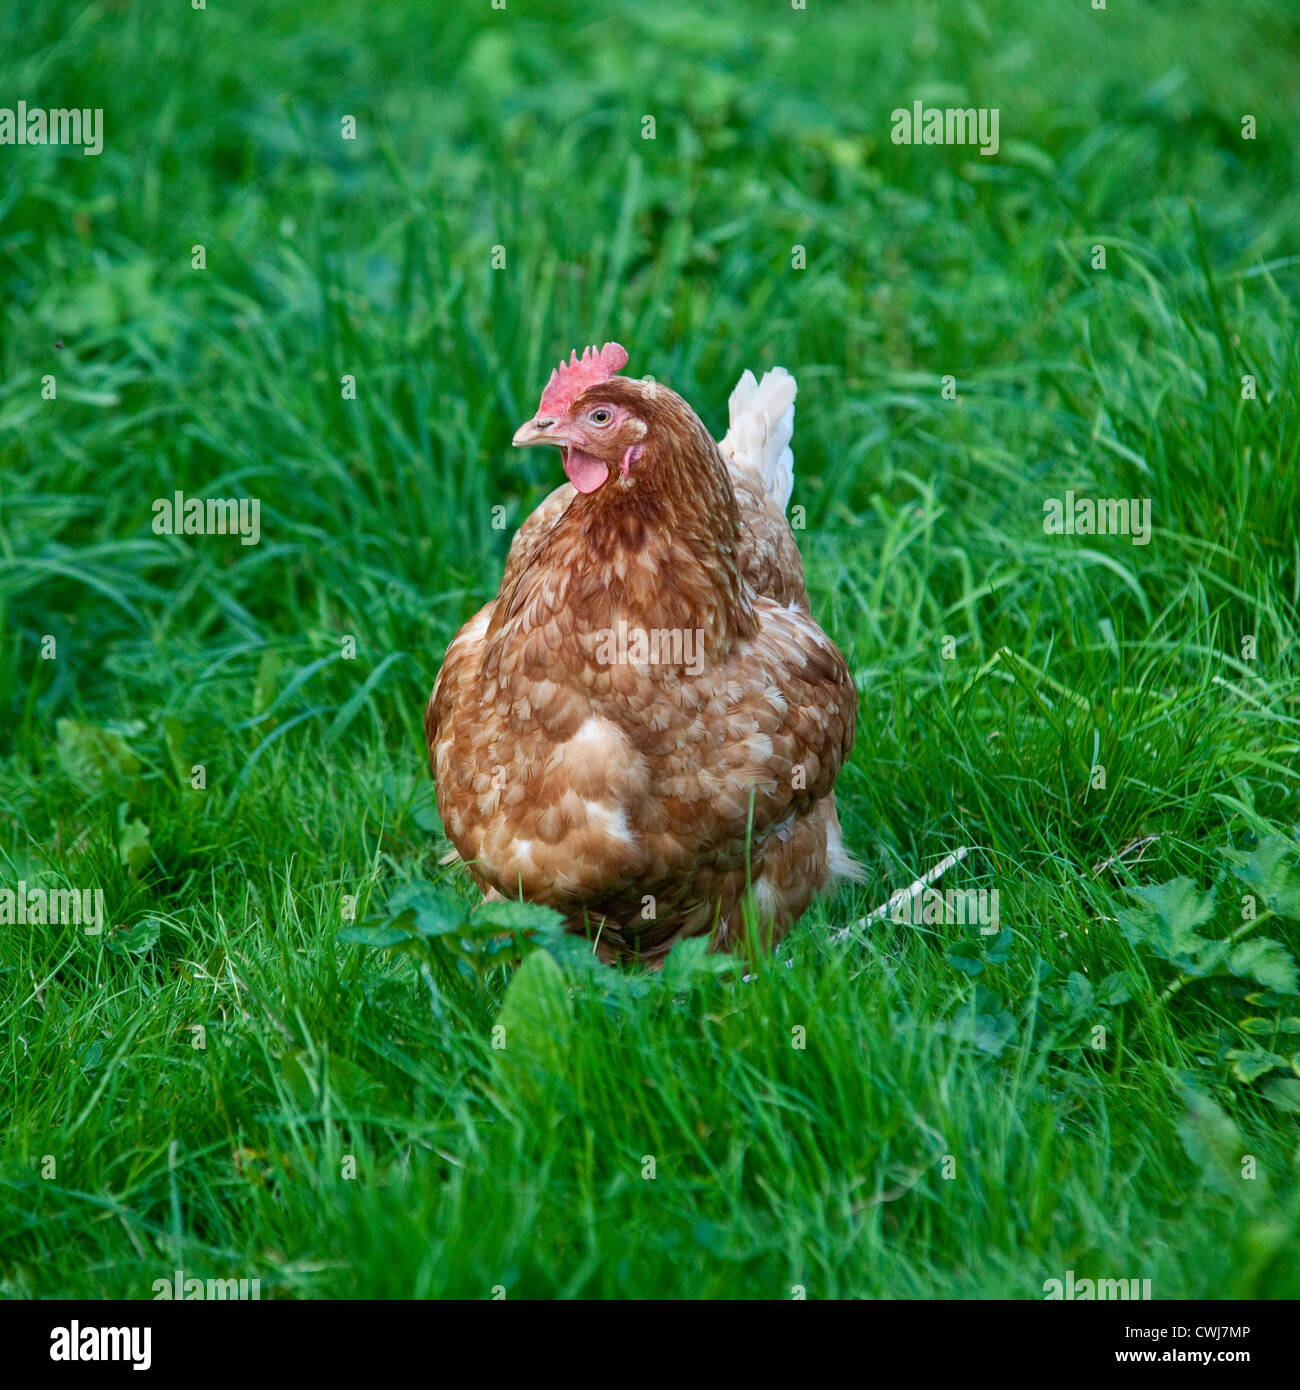 Buff orpington cross breed chicken, Cornwall, England, United Kingdom. Stock Photo